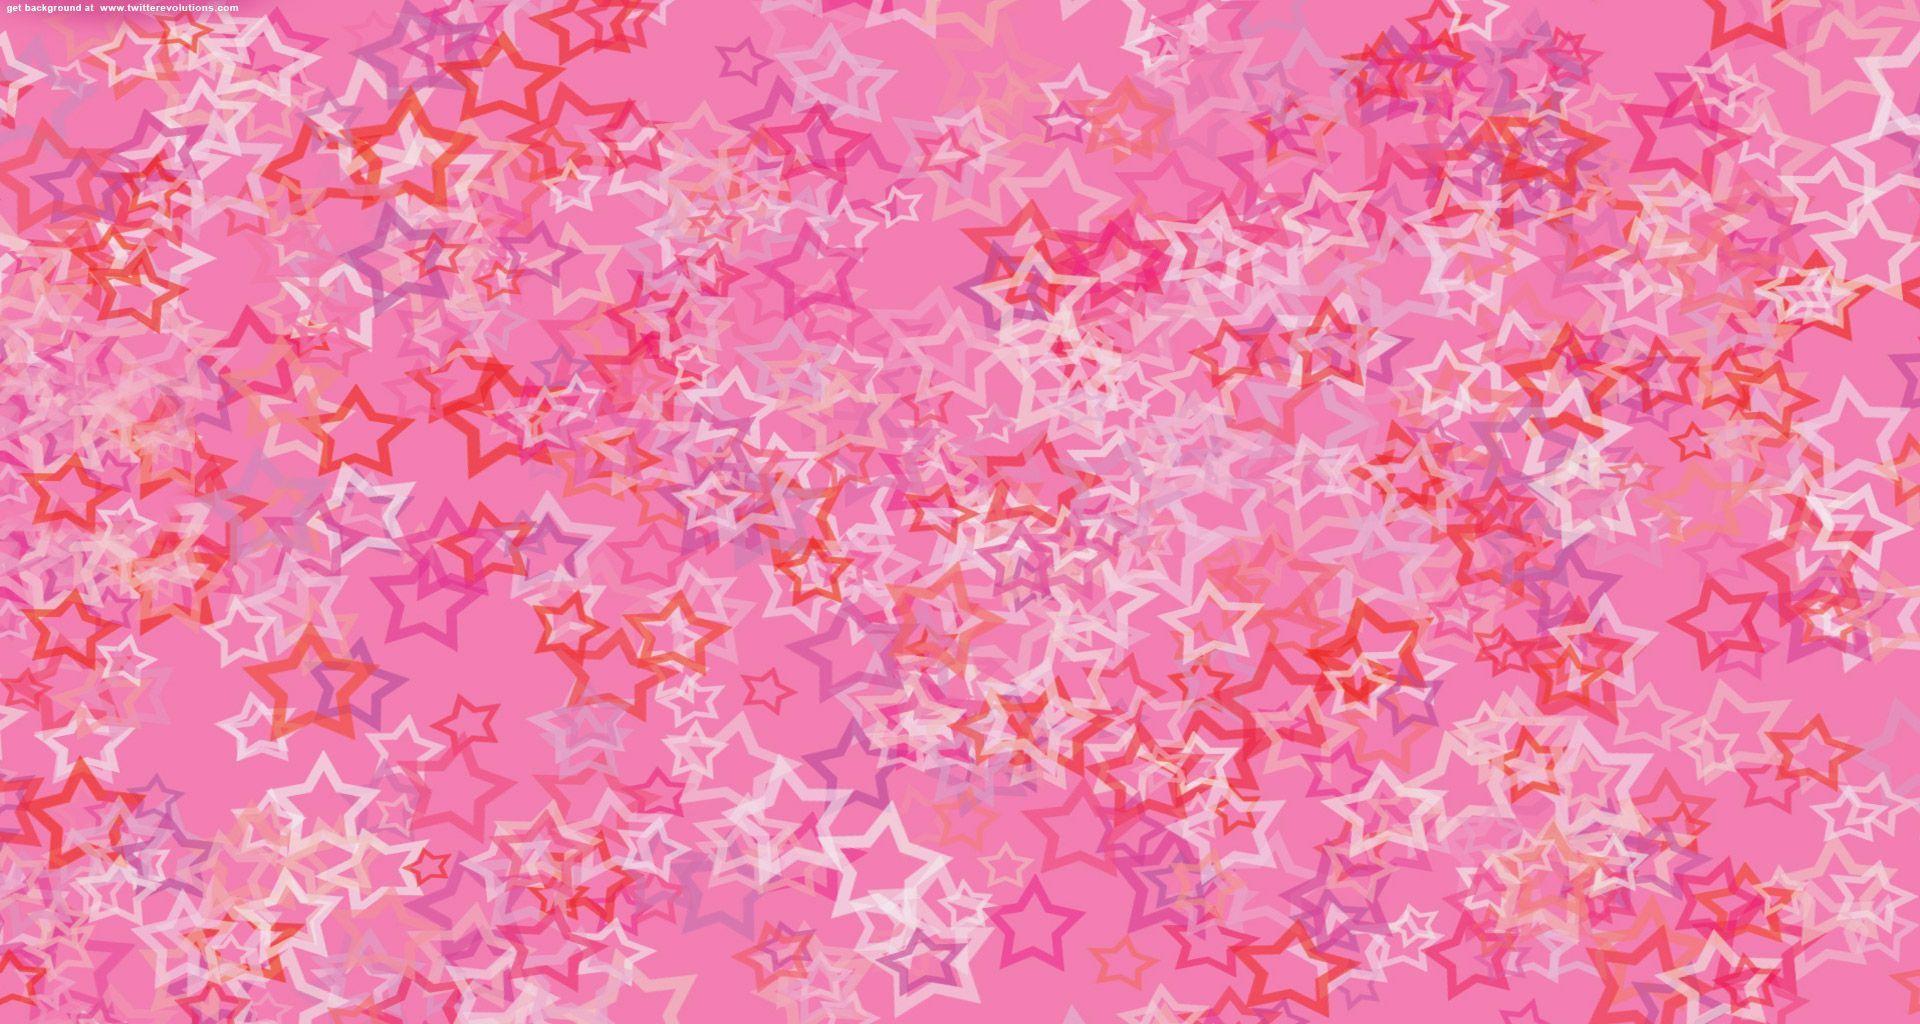 Pink stars Twitter background. Twitter background